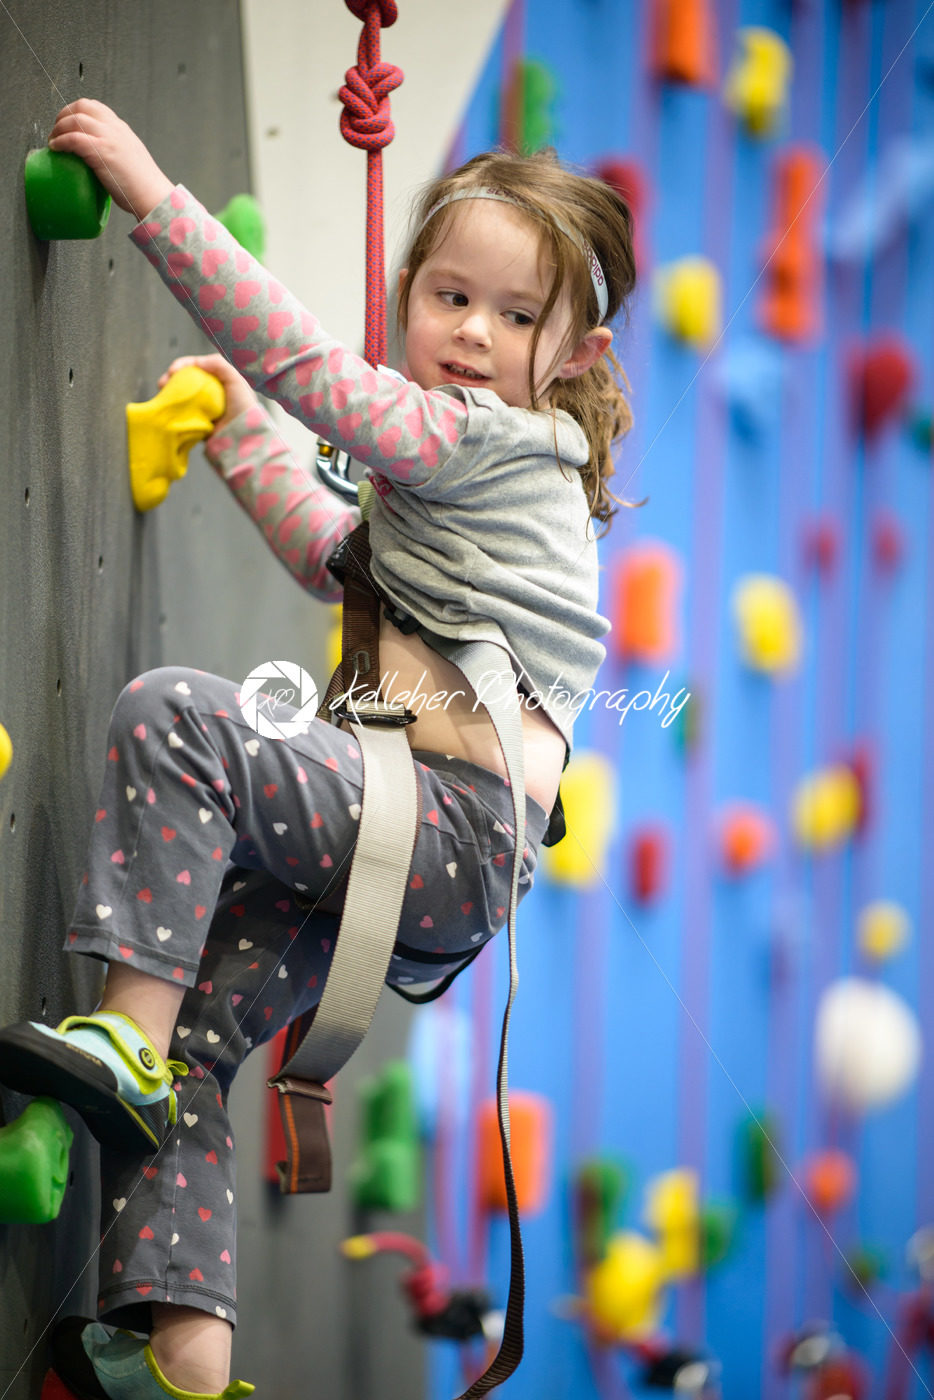 little girl climbing a rock wall indoor - Kelleher Photography Store